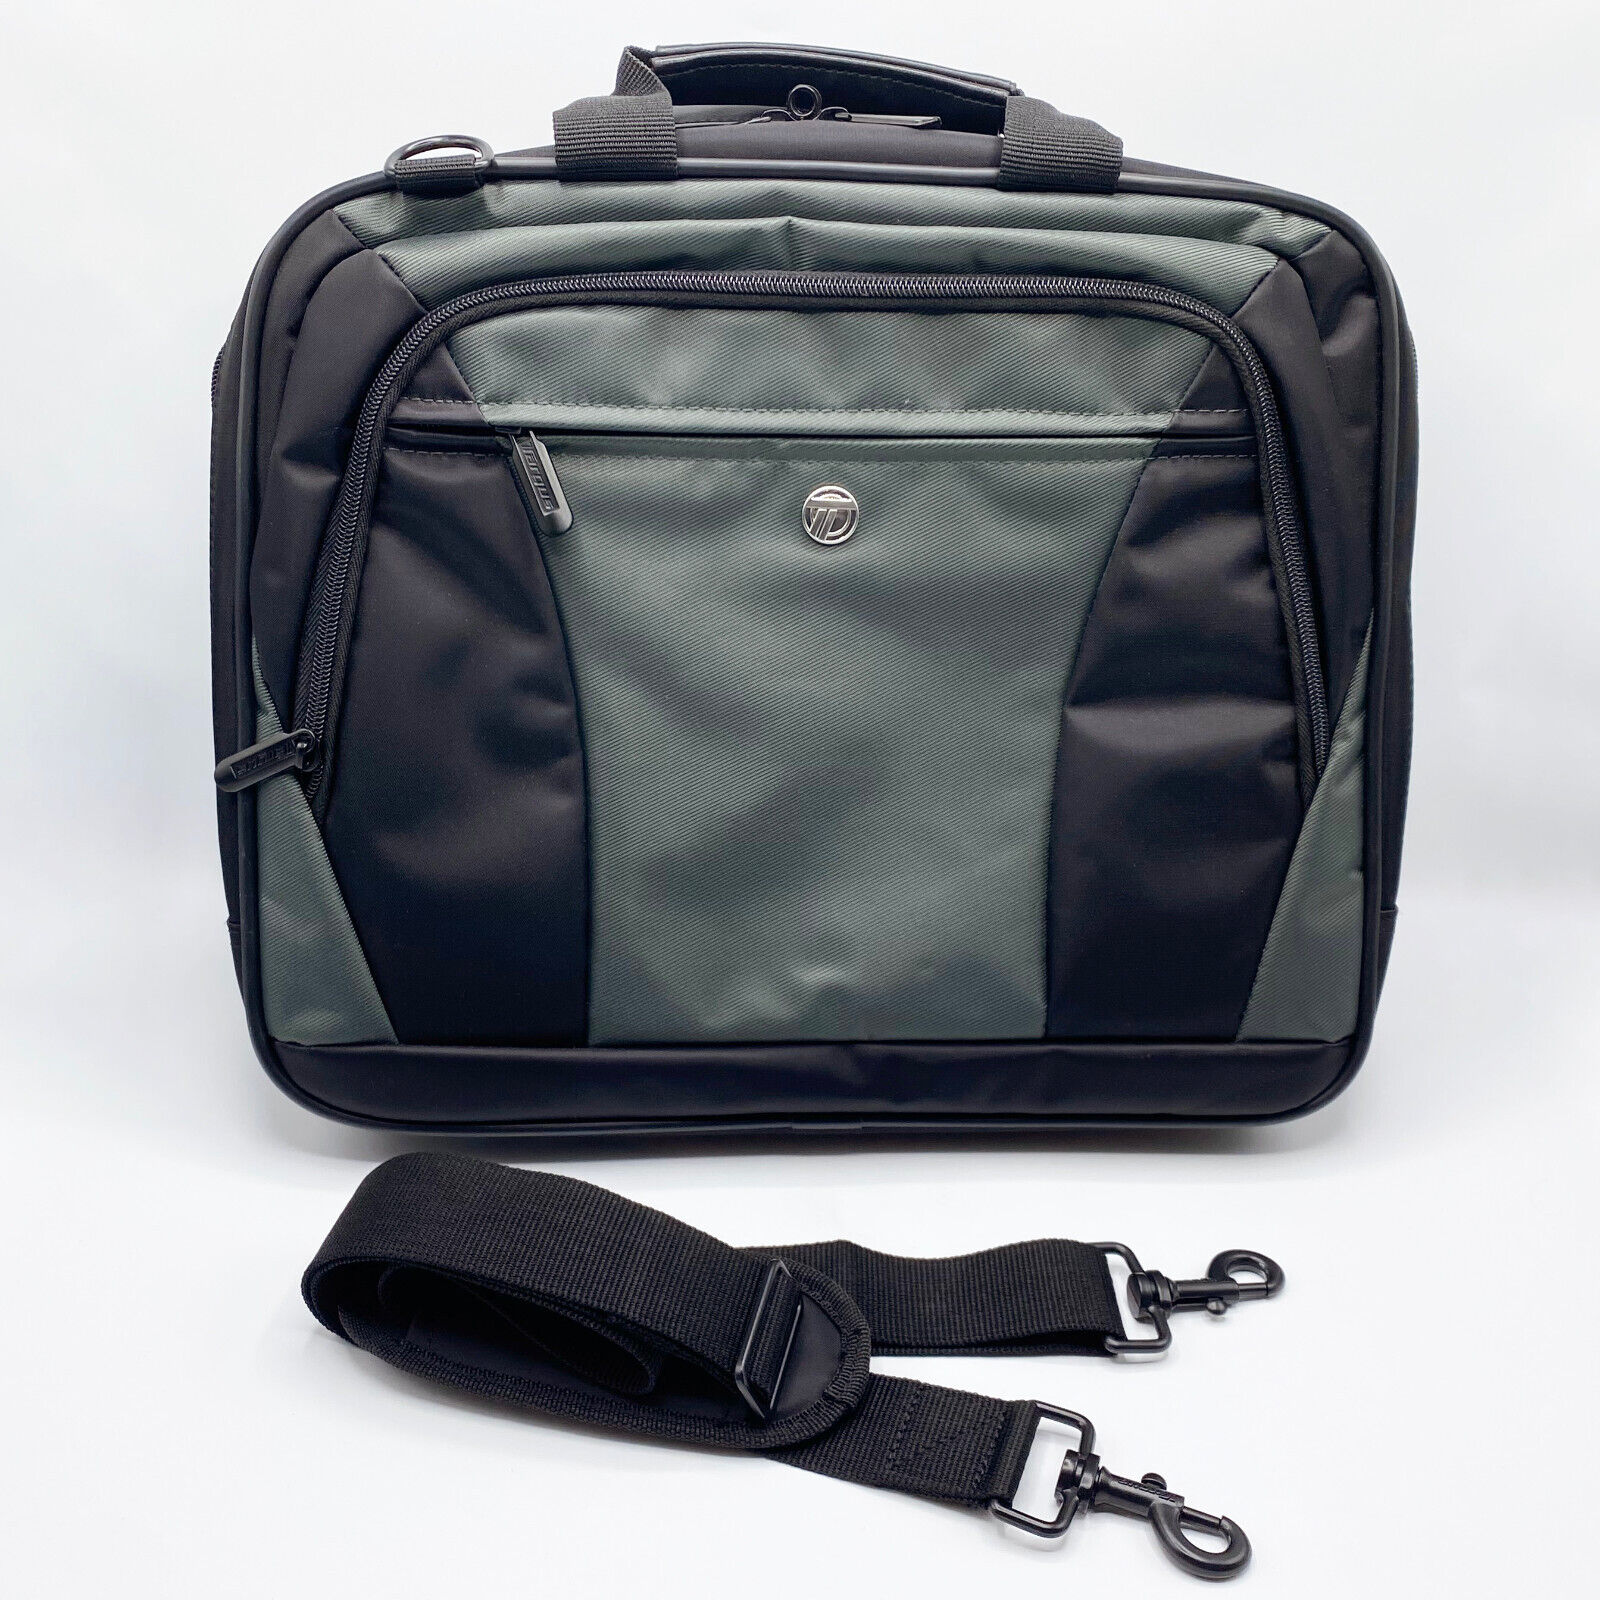 TARGUS CityLite CVR400 Briefcase 14 inch Laptop Bag Carry On - Gray Green Black